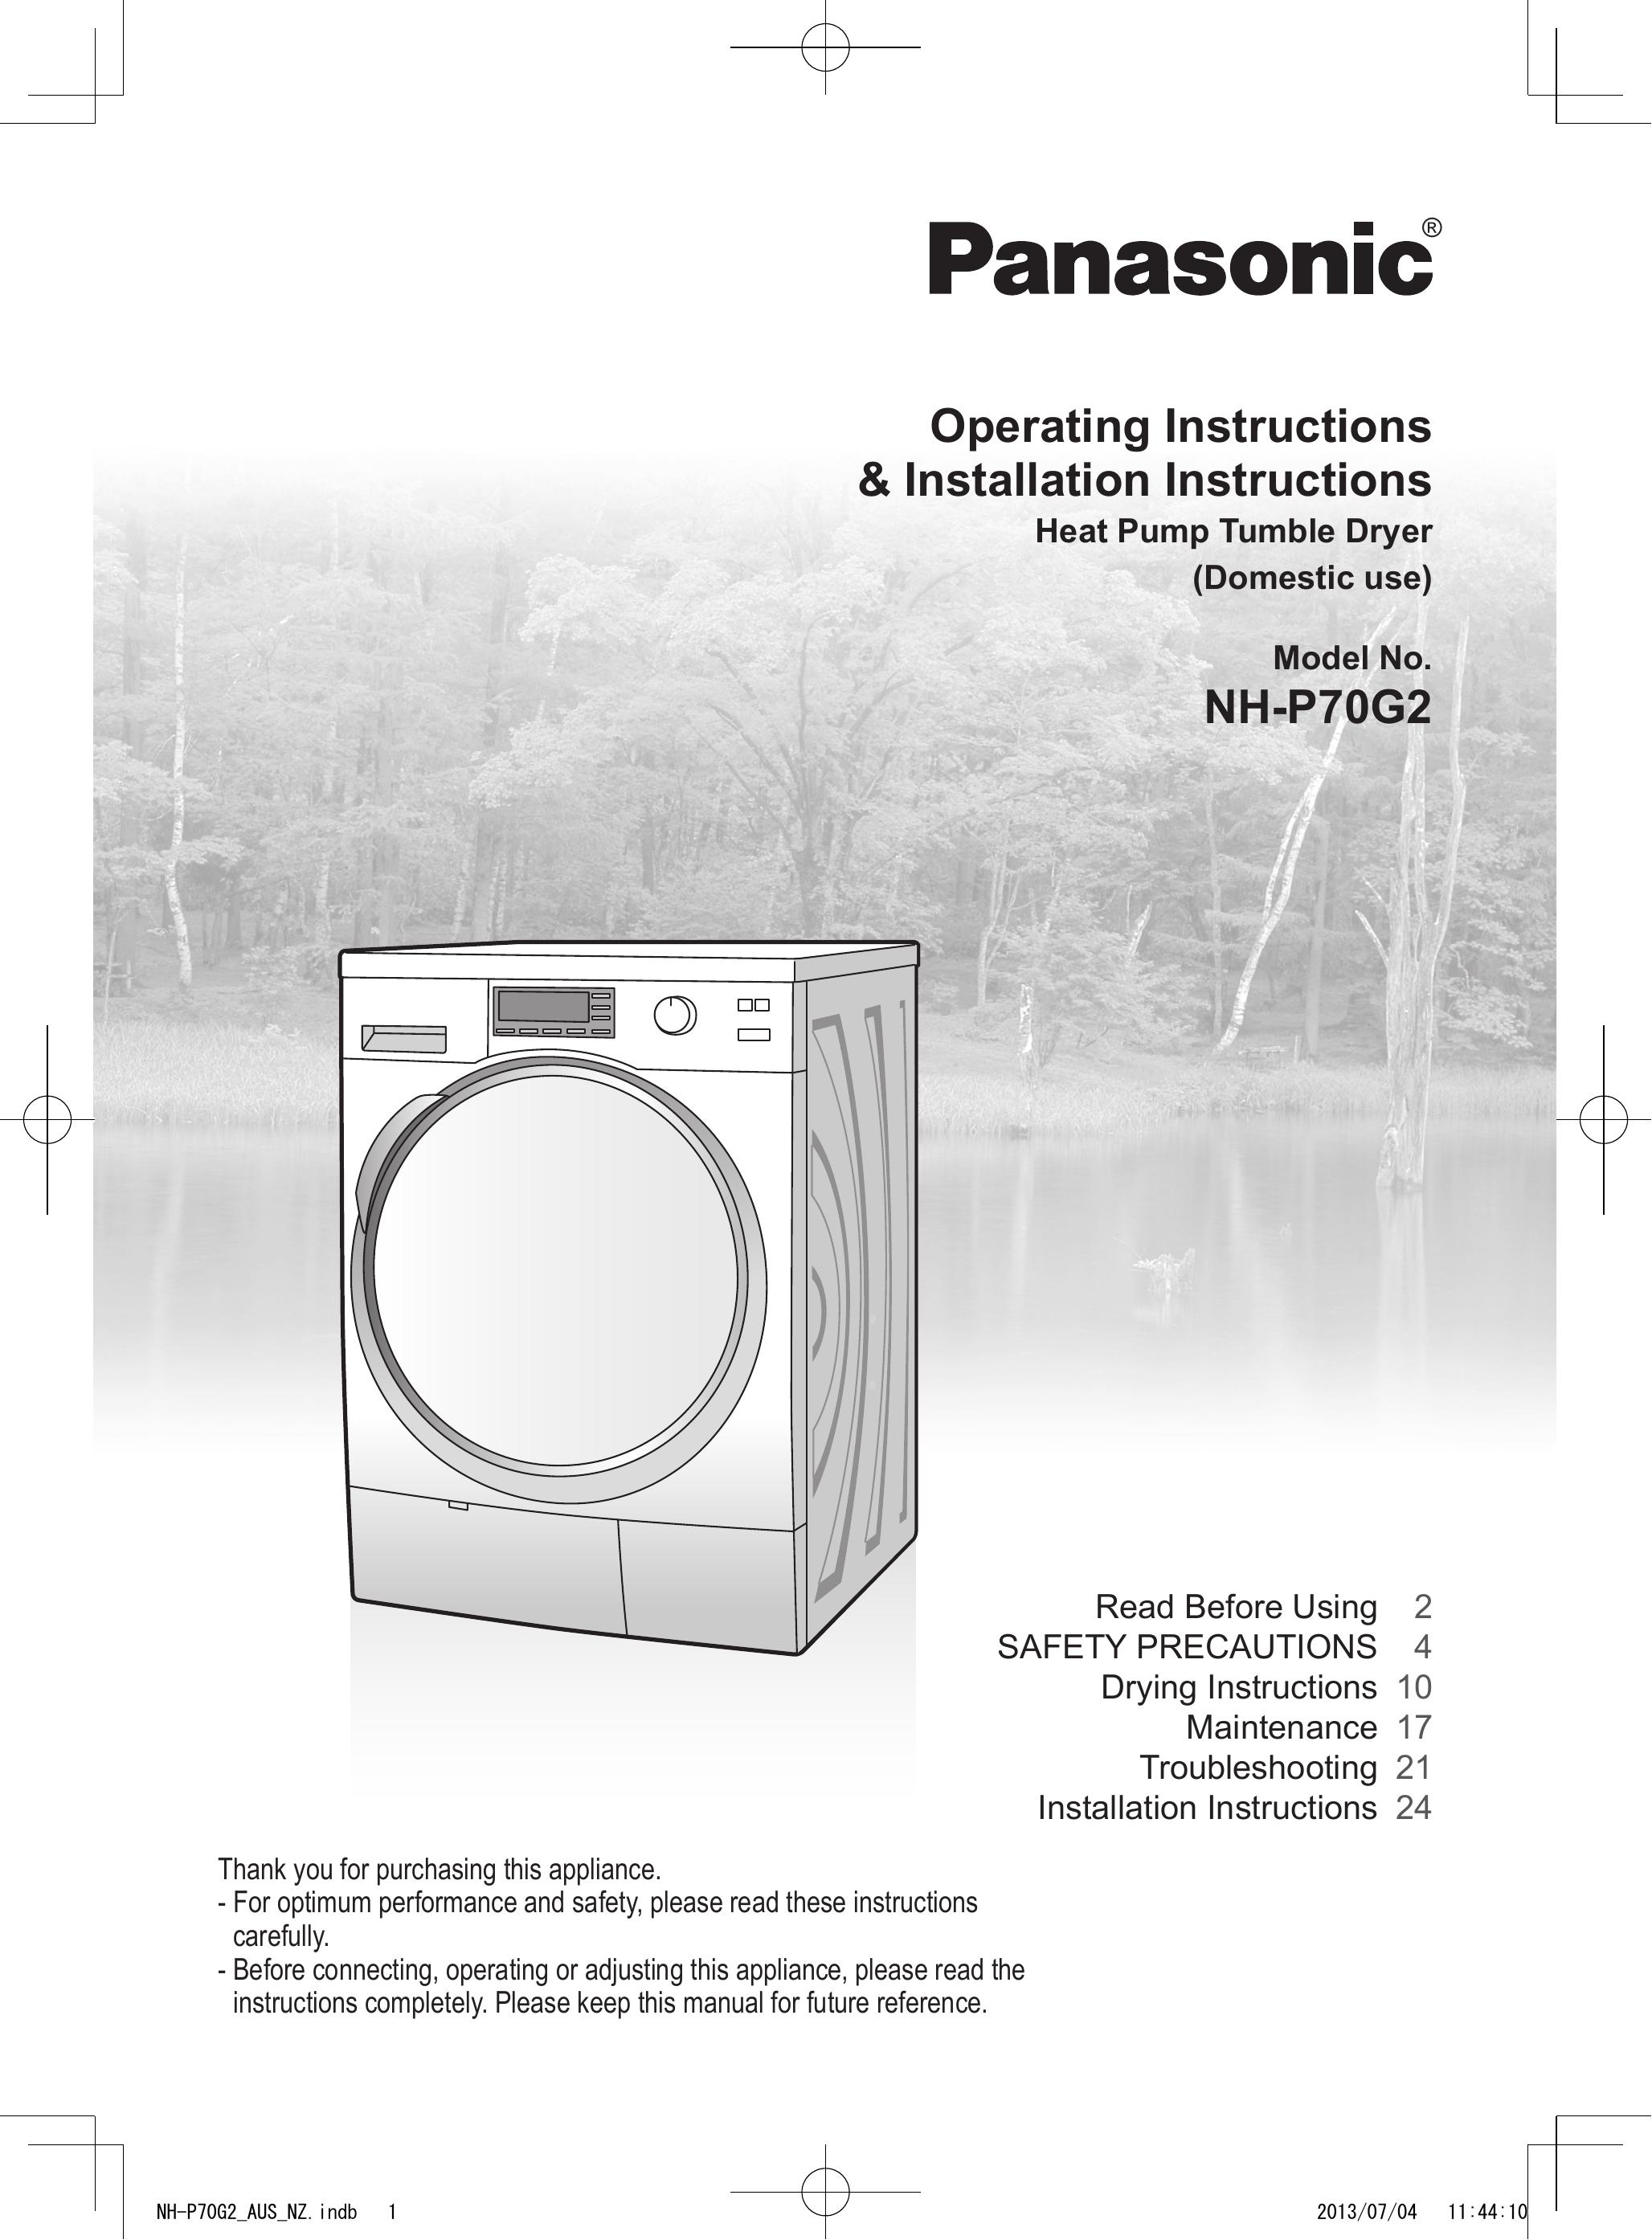 Panasonic NH-P70G2 Clothes Dryer User Manual